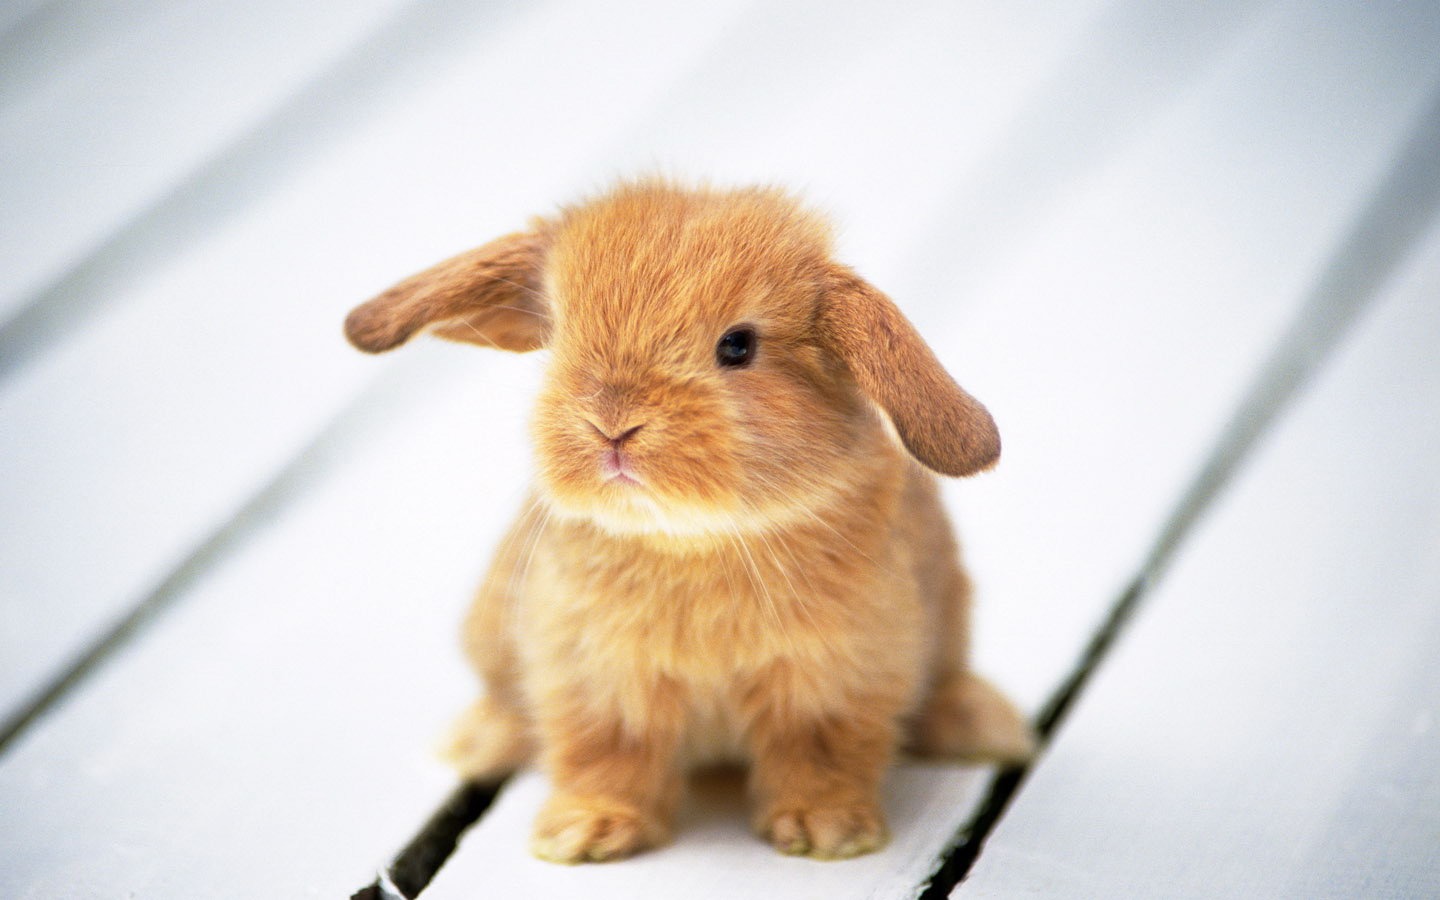 Cute little bunny wallpaper #9 - 1440x900